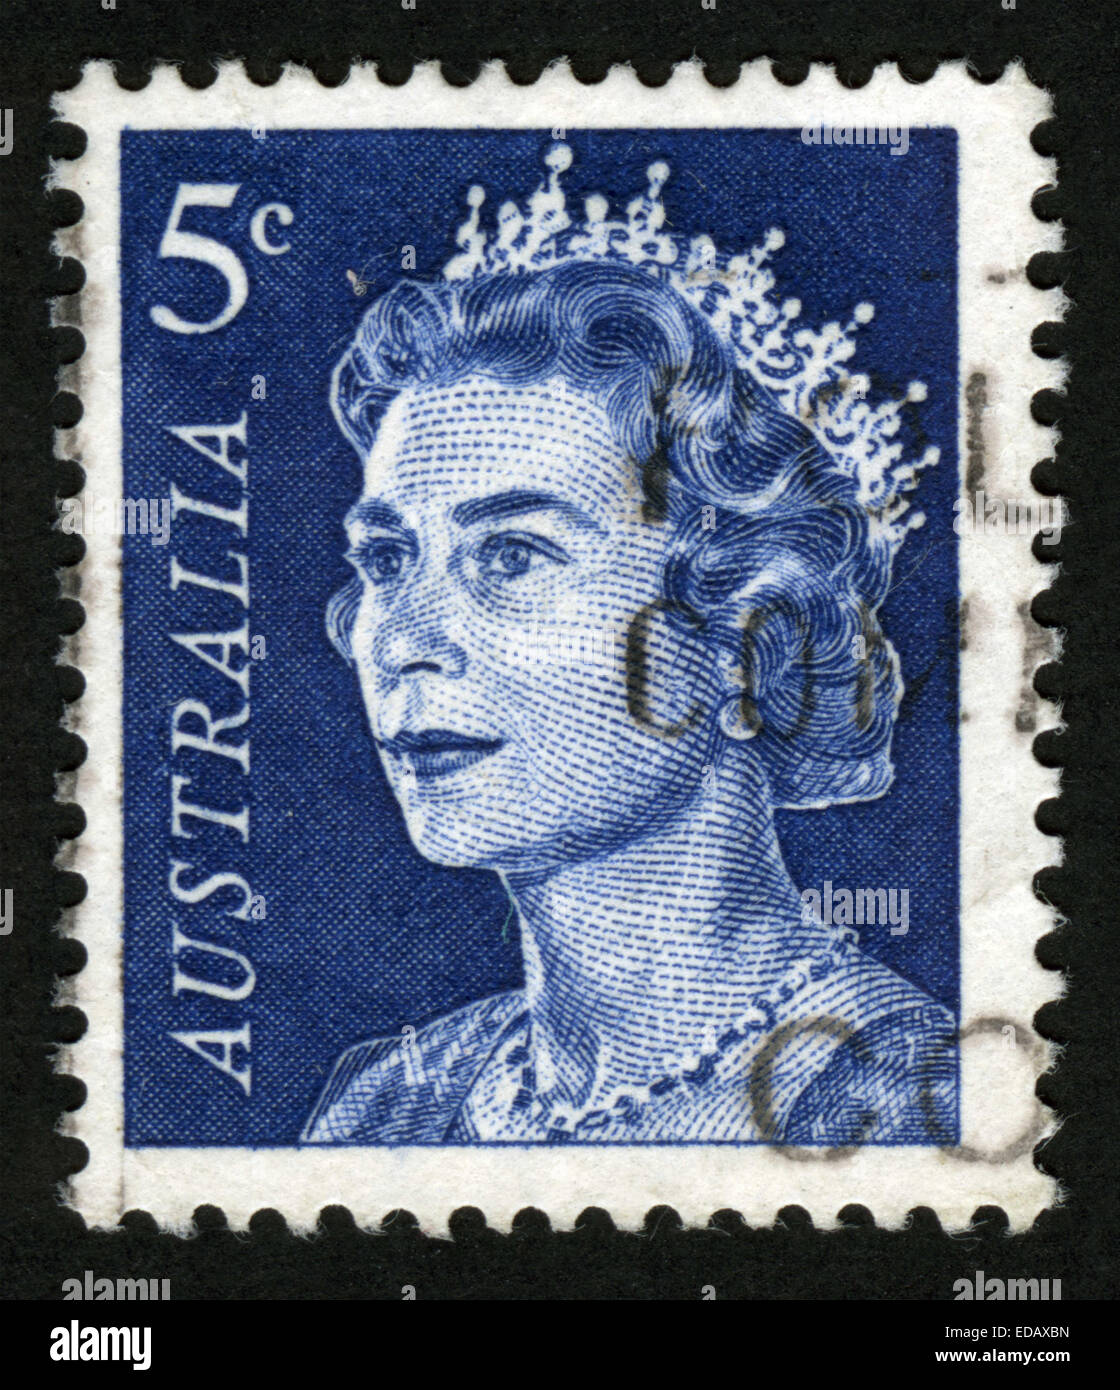 AUSTRALIA - 1971: A stamp printed in Australia, shows Queen Elizabeth ...